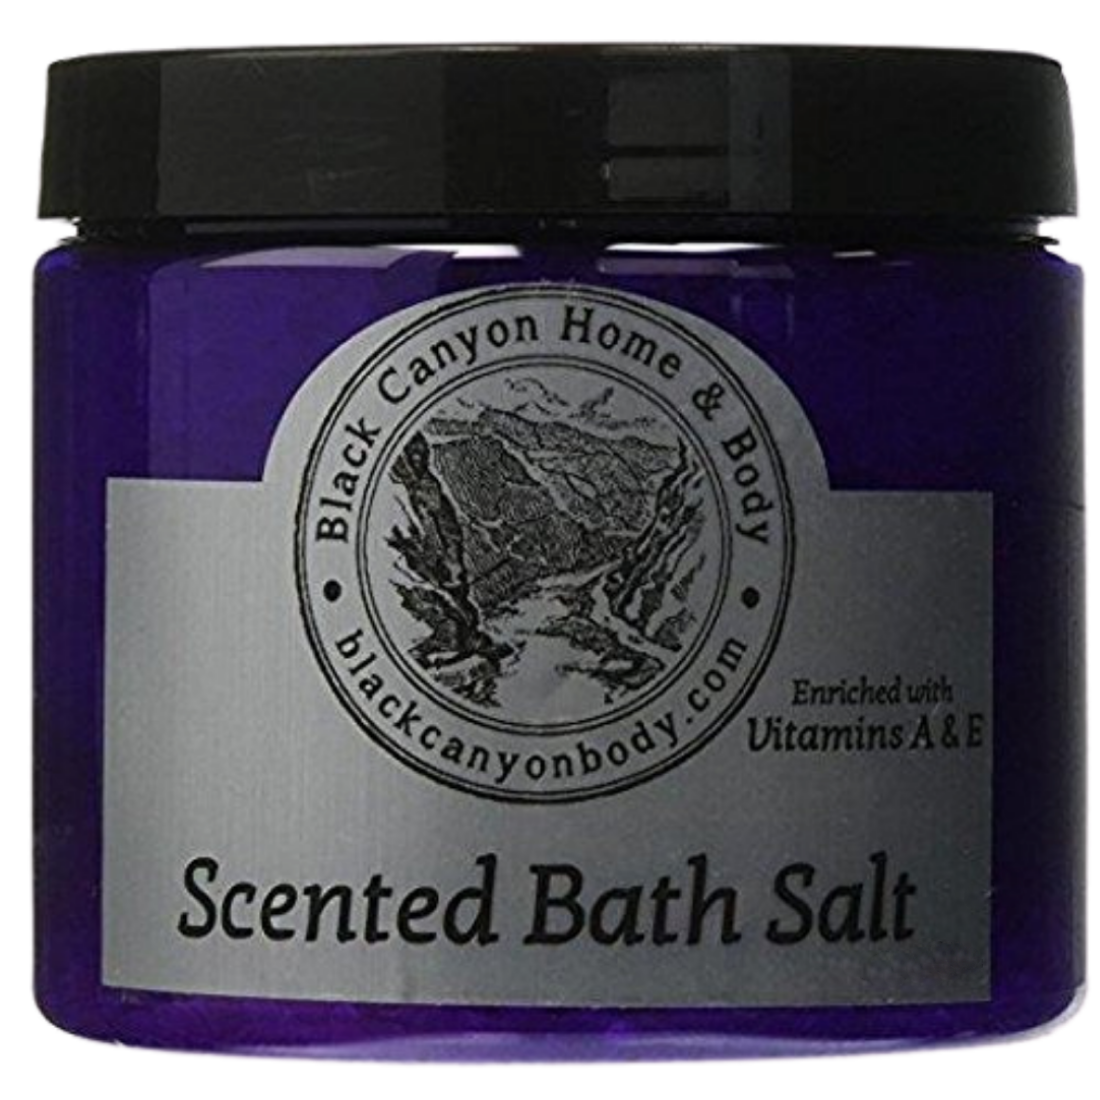 Black Canyon Cranberry Scented Sea Salt Bath Soak